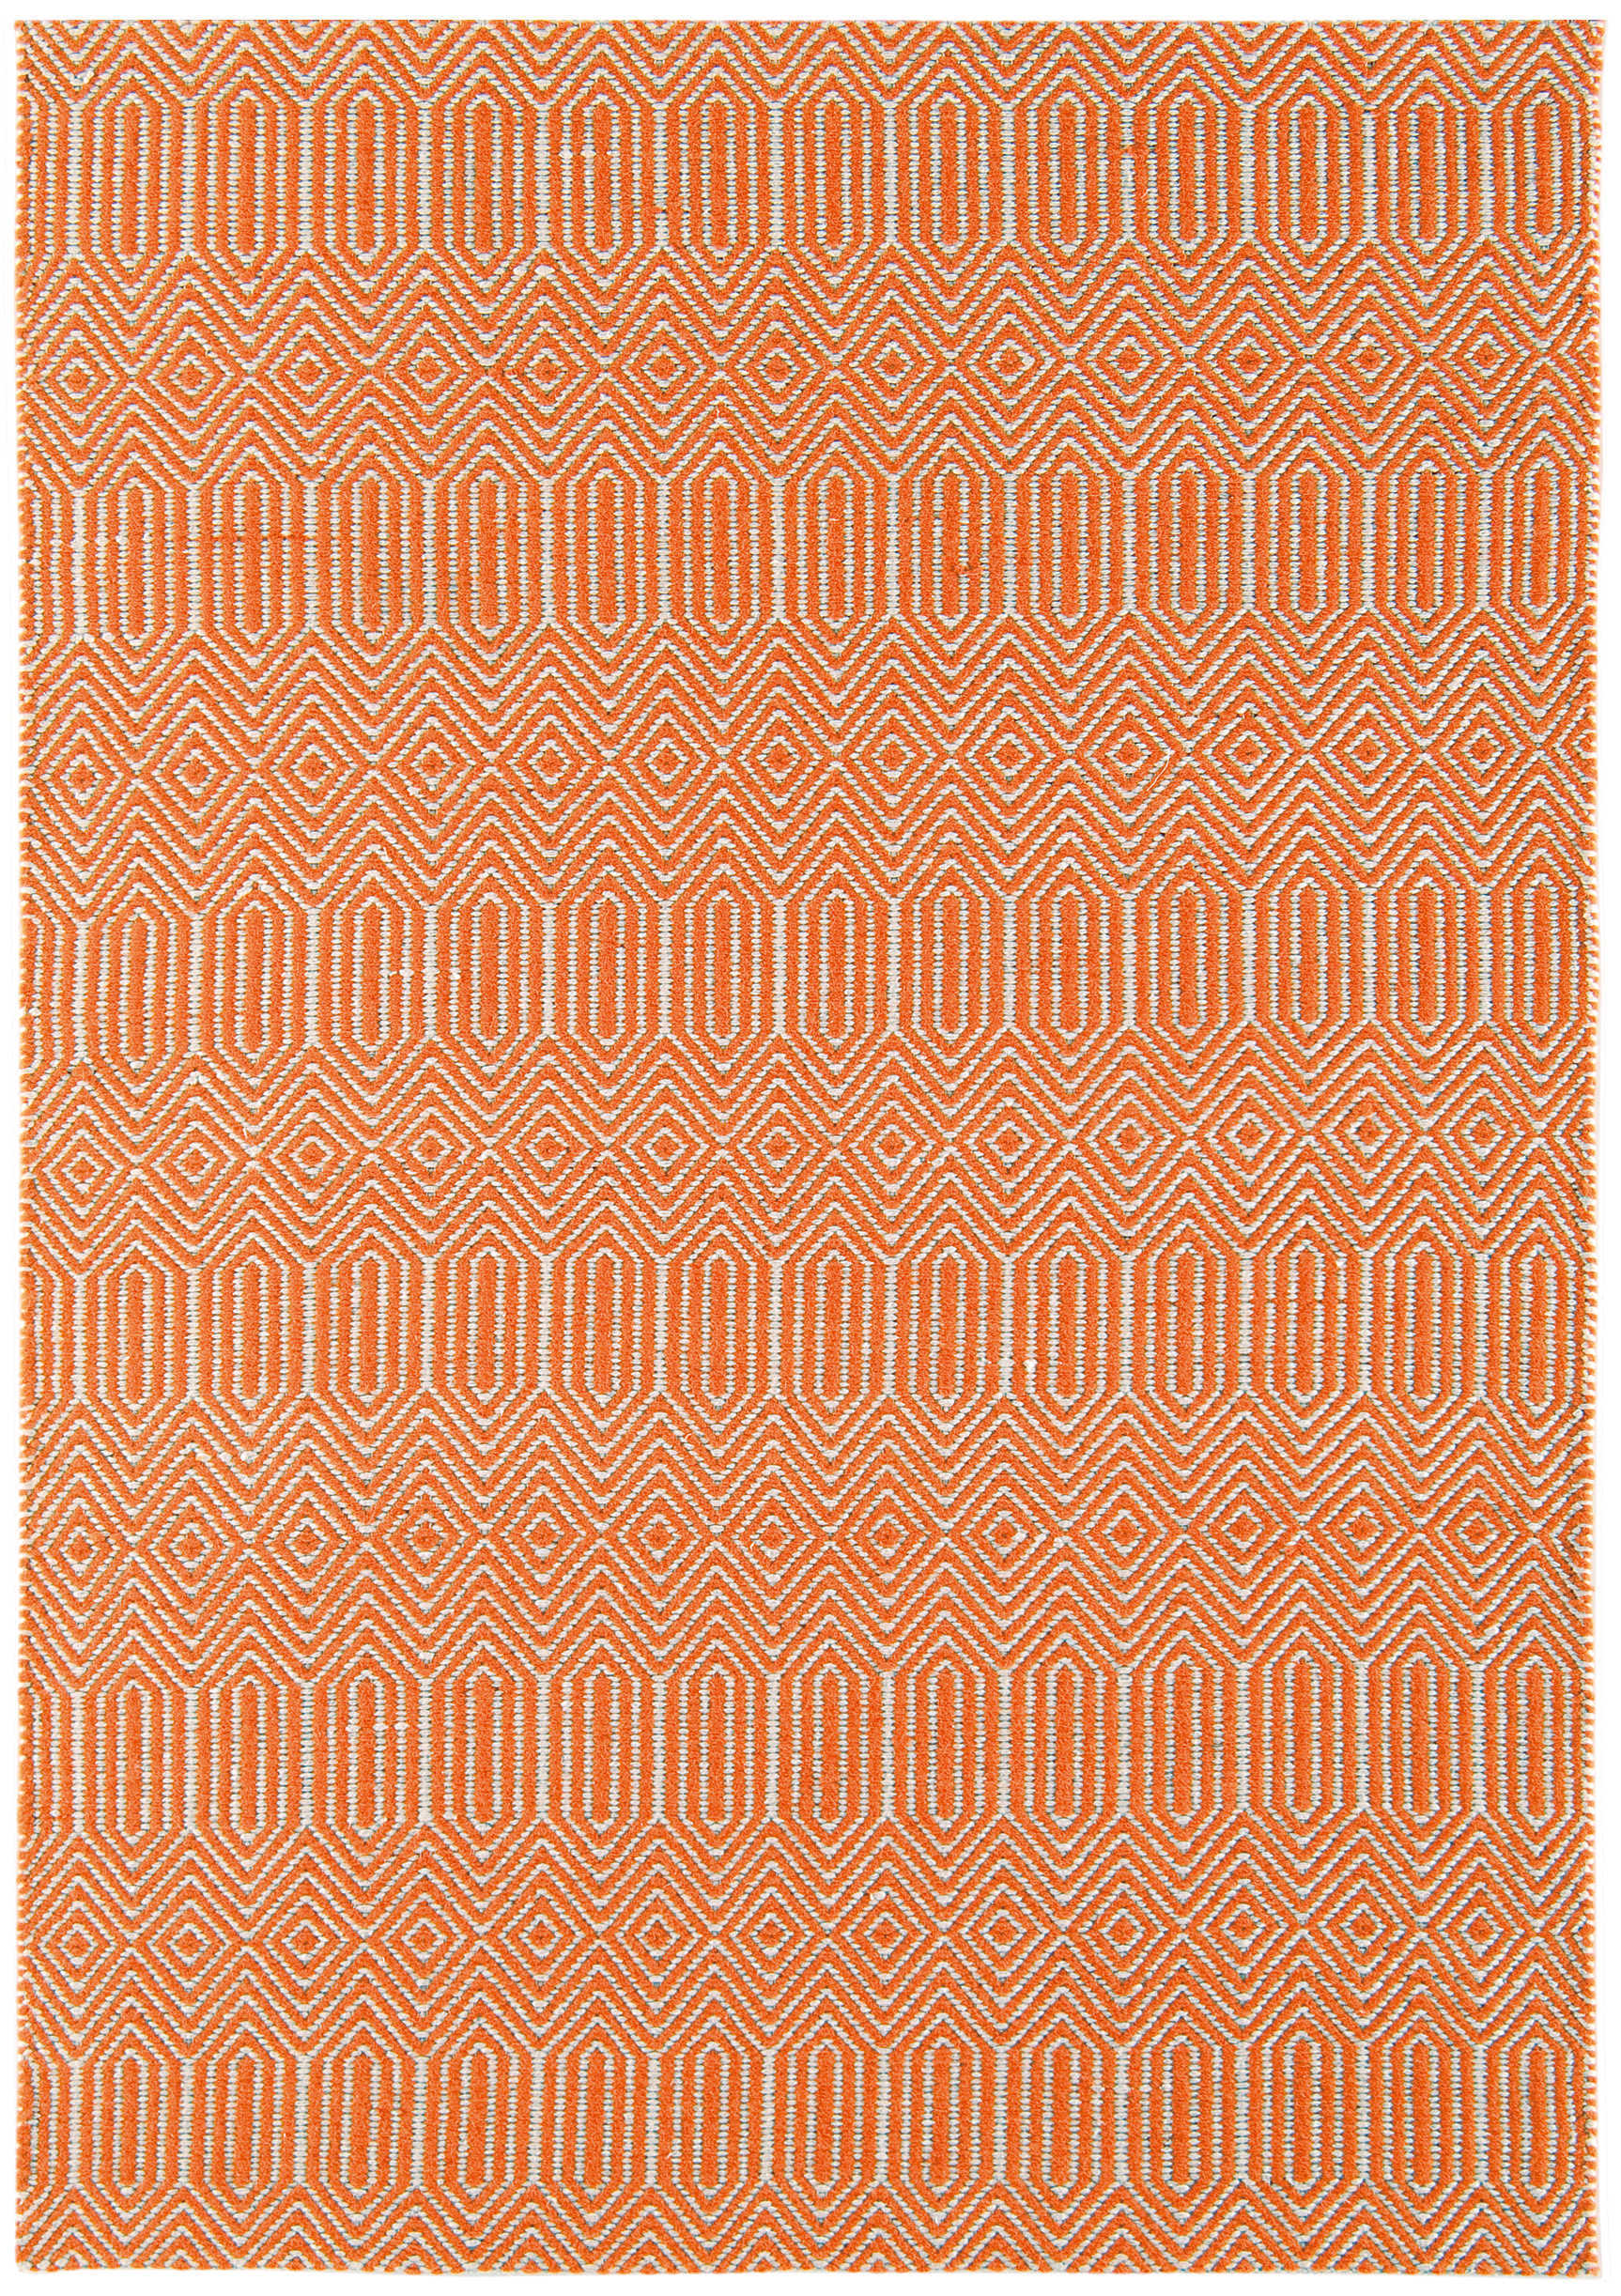 orange and white woven rug with aztec chevron pattern